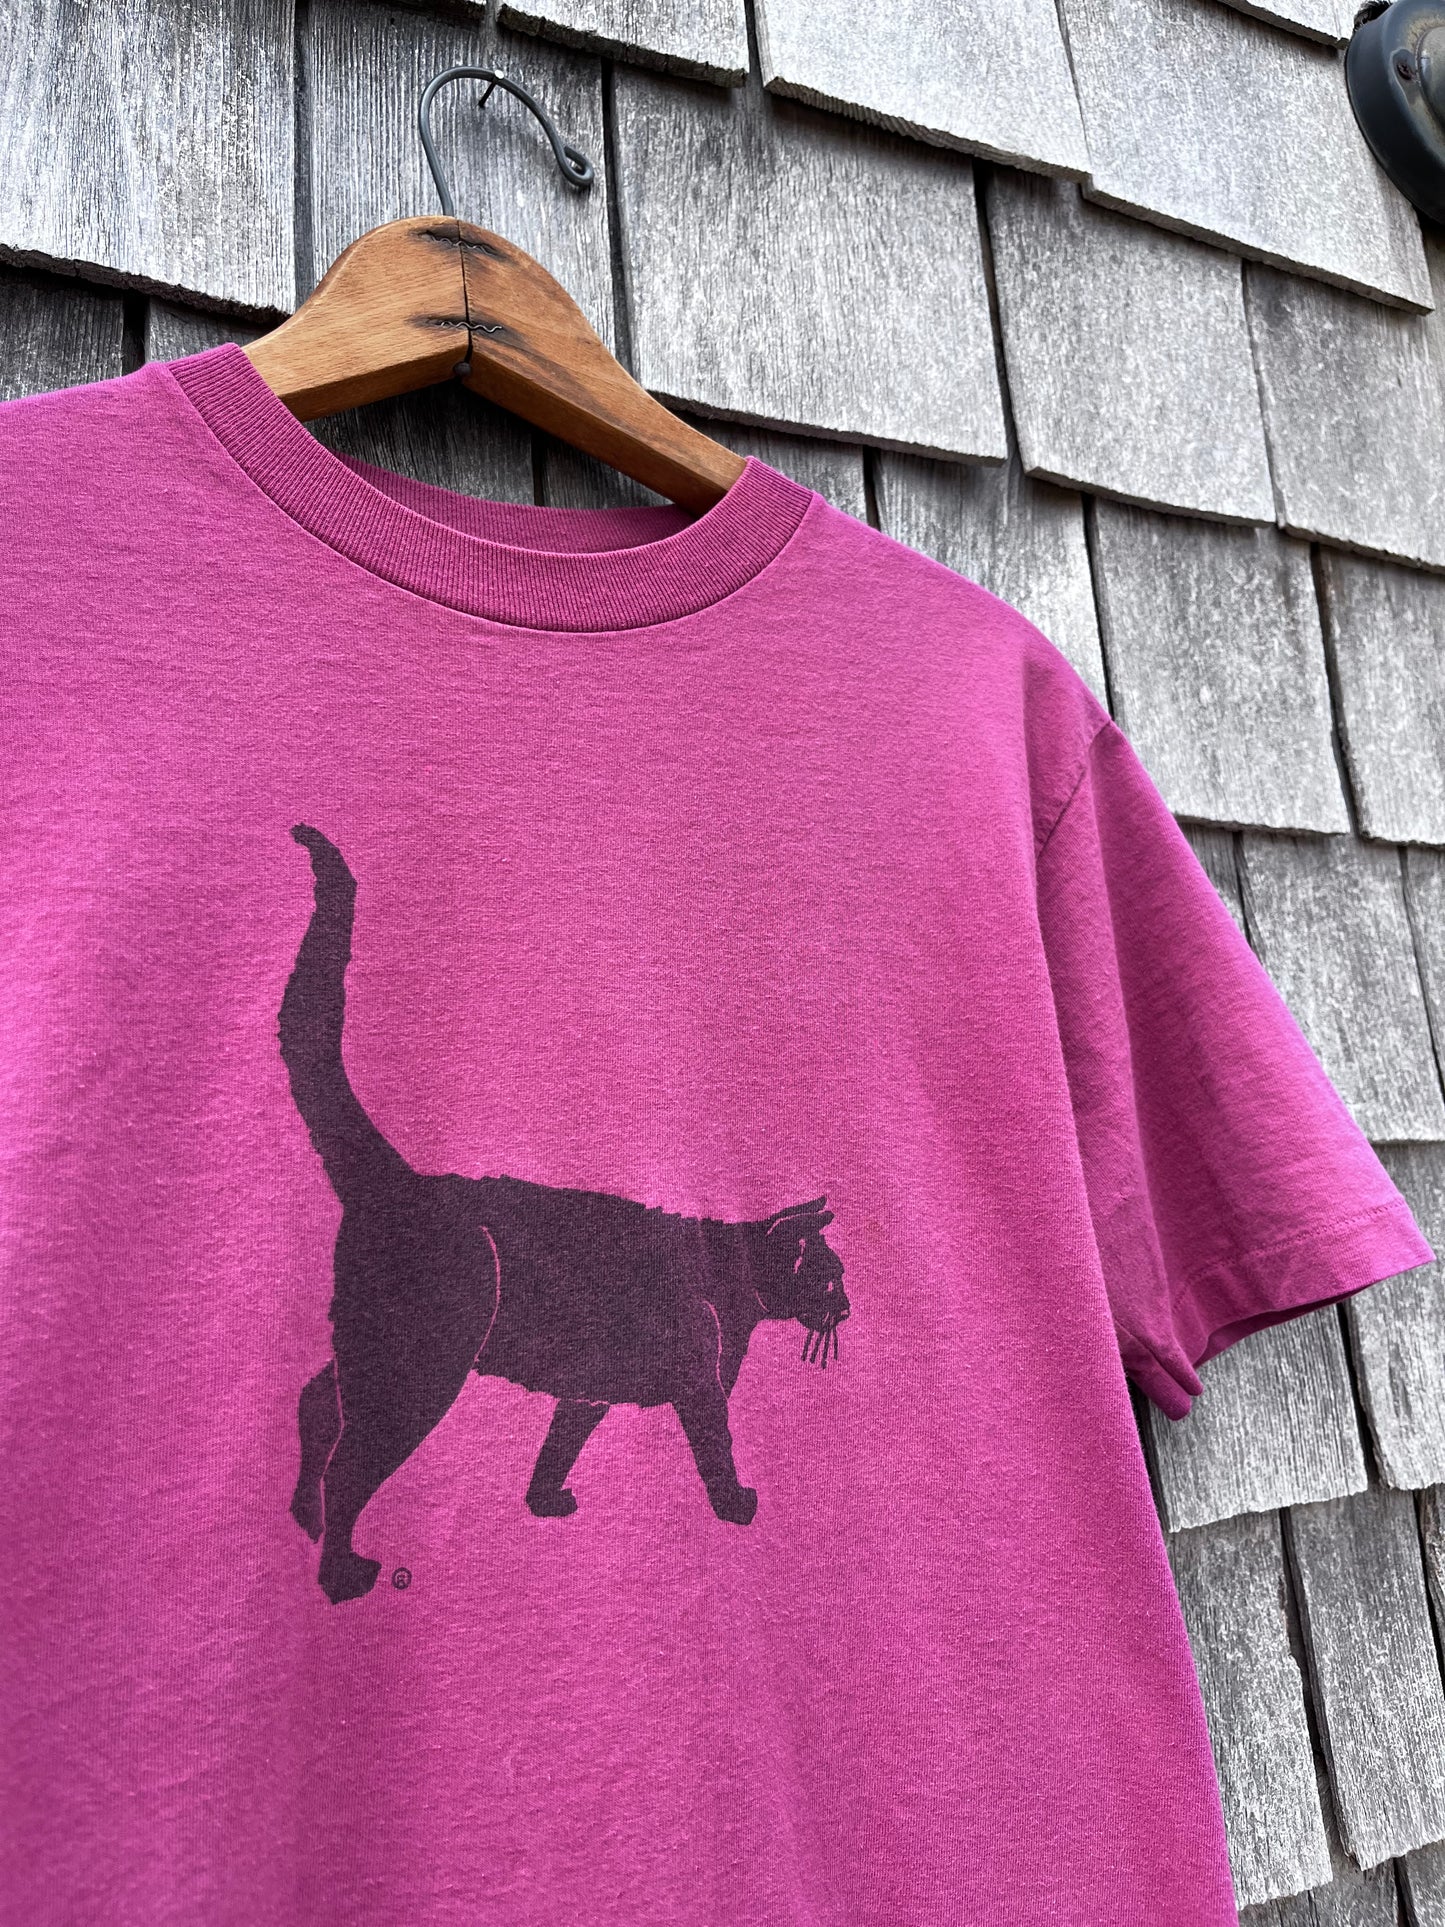 90s The Black Cat Nantucket T-Shirt